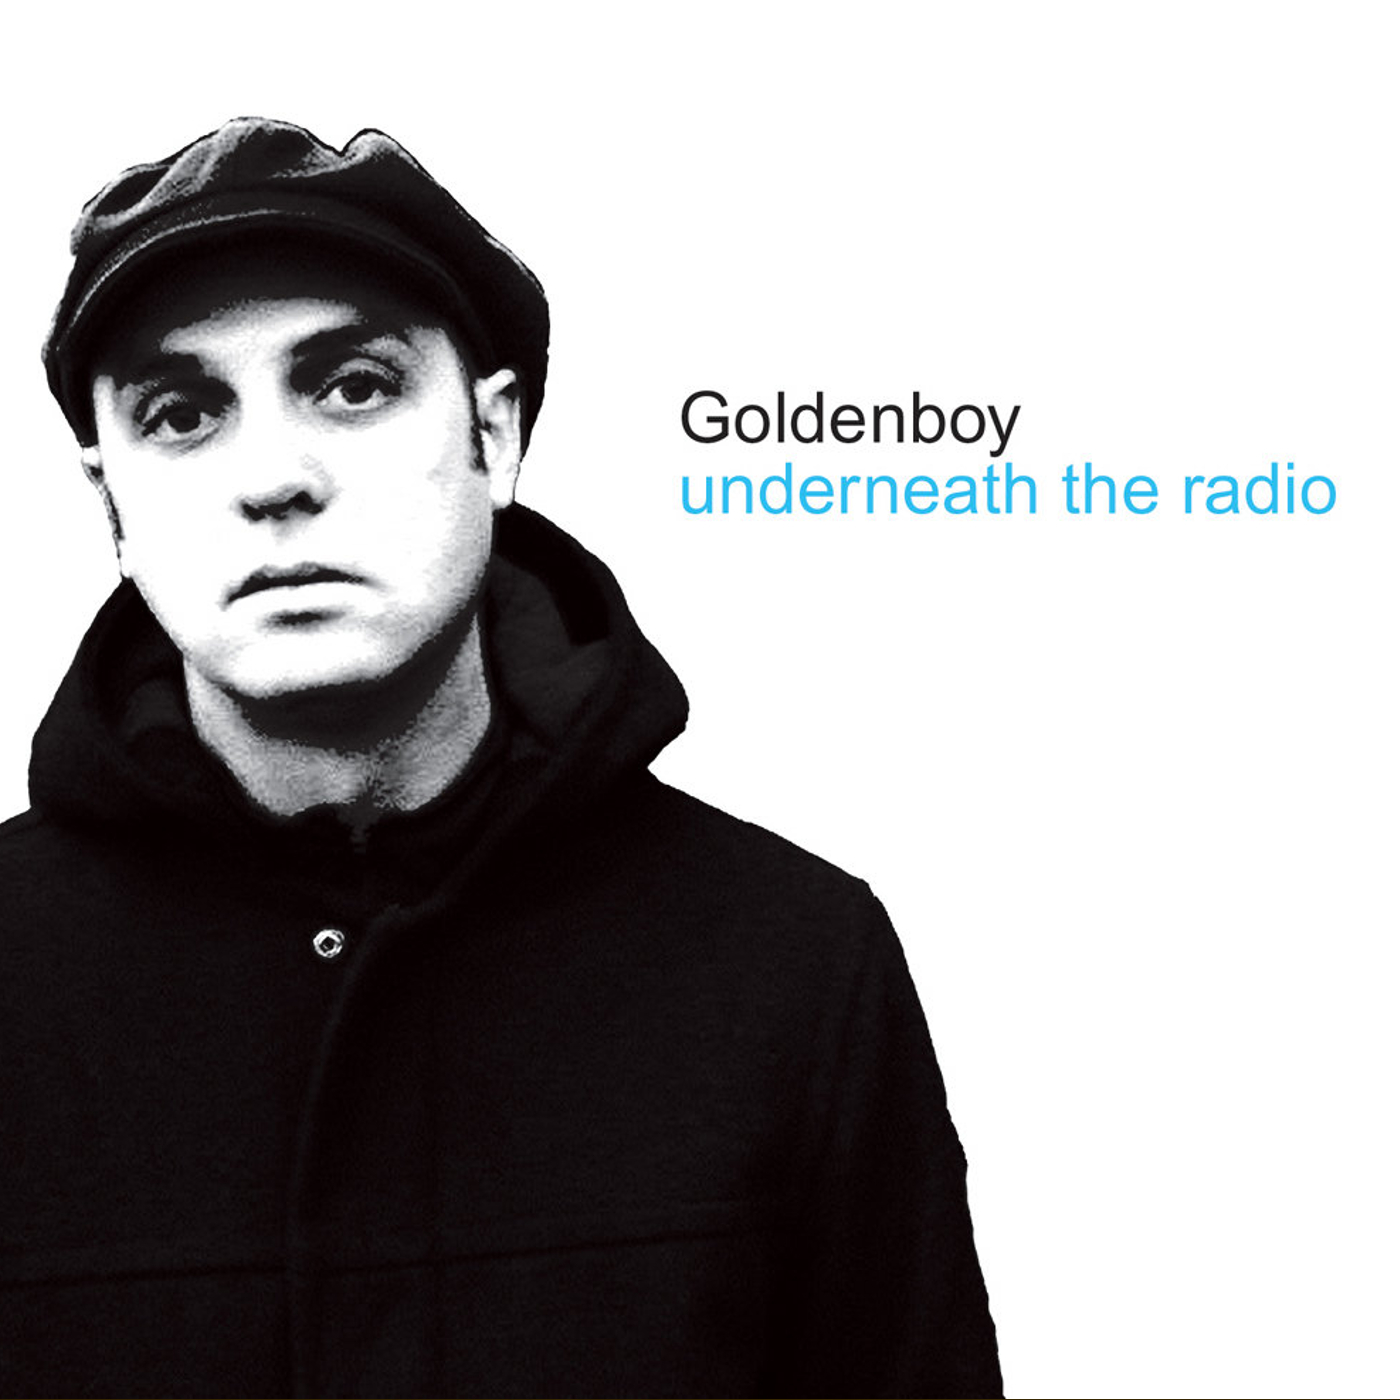 Goldenboy / underneath the radio